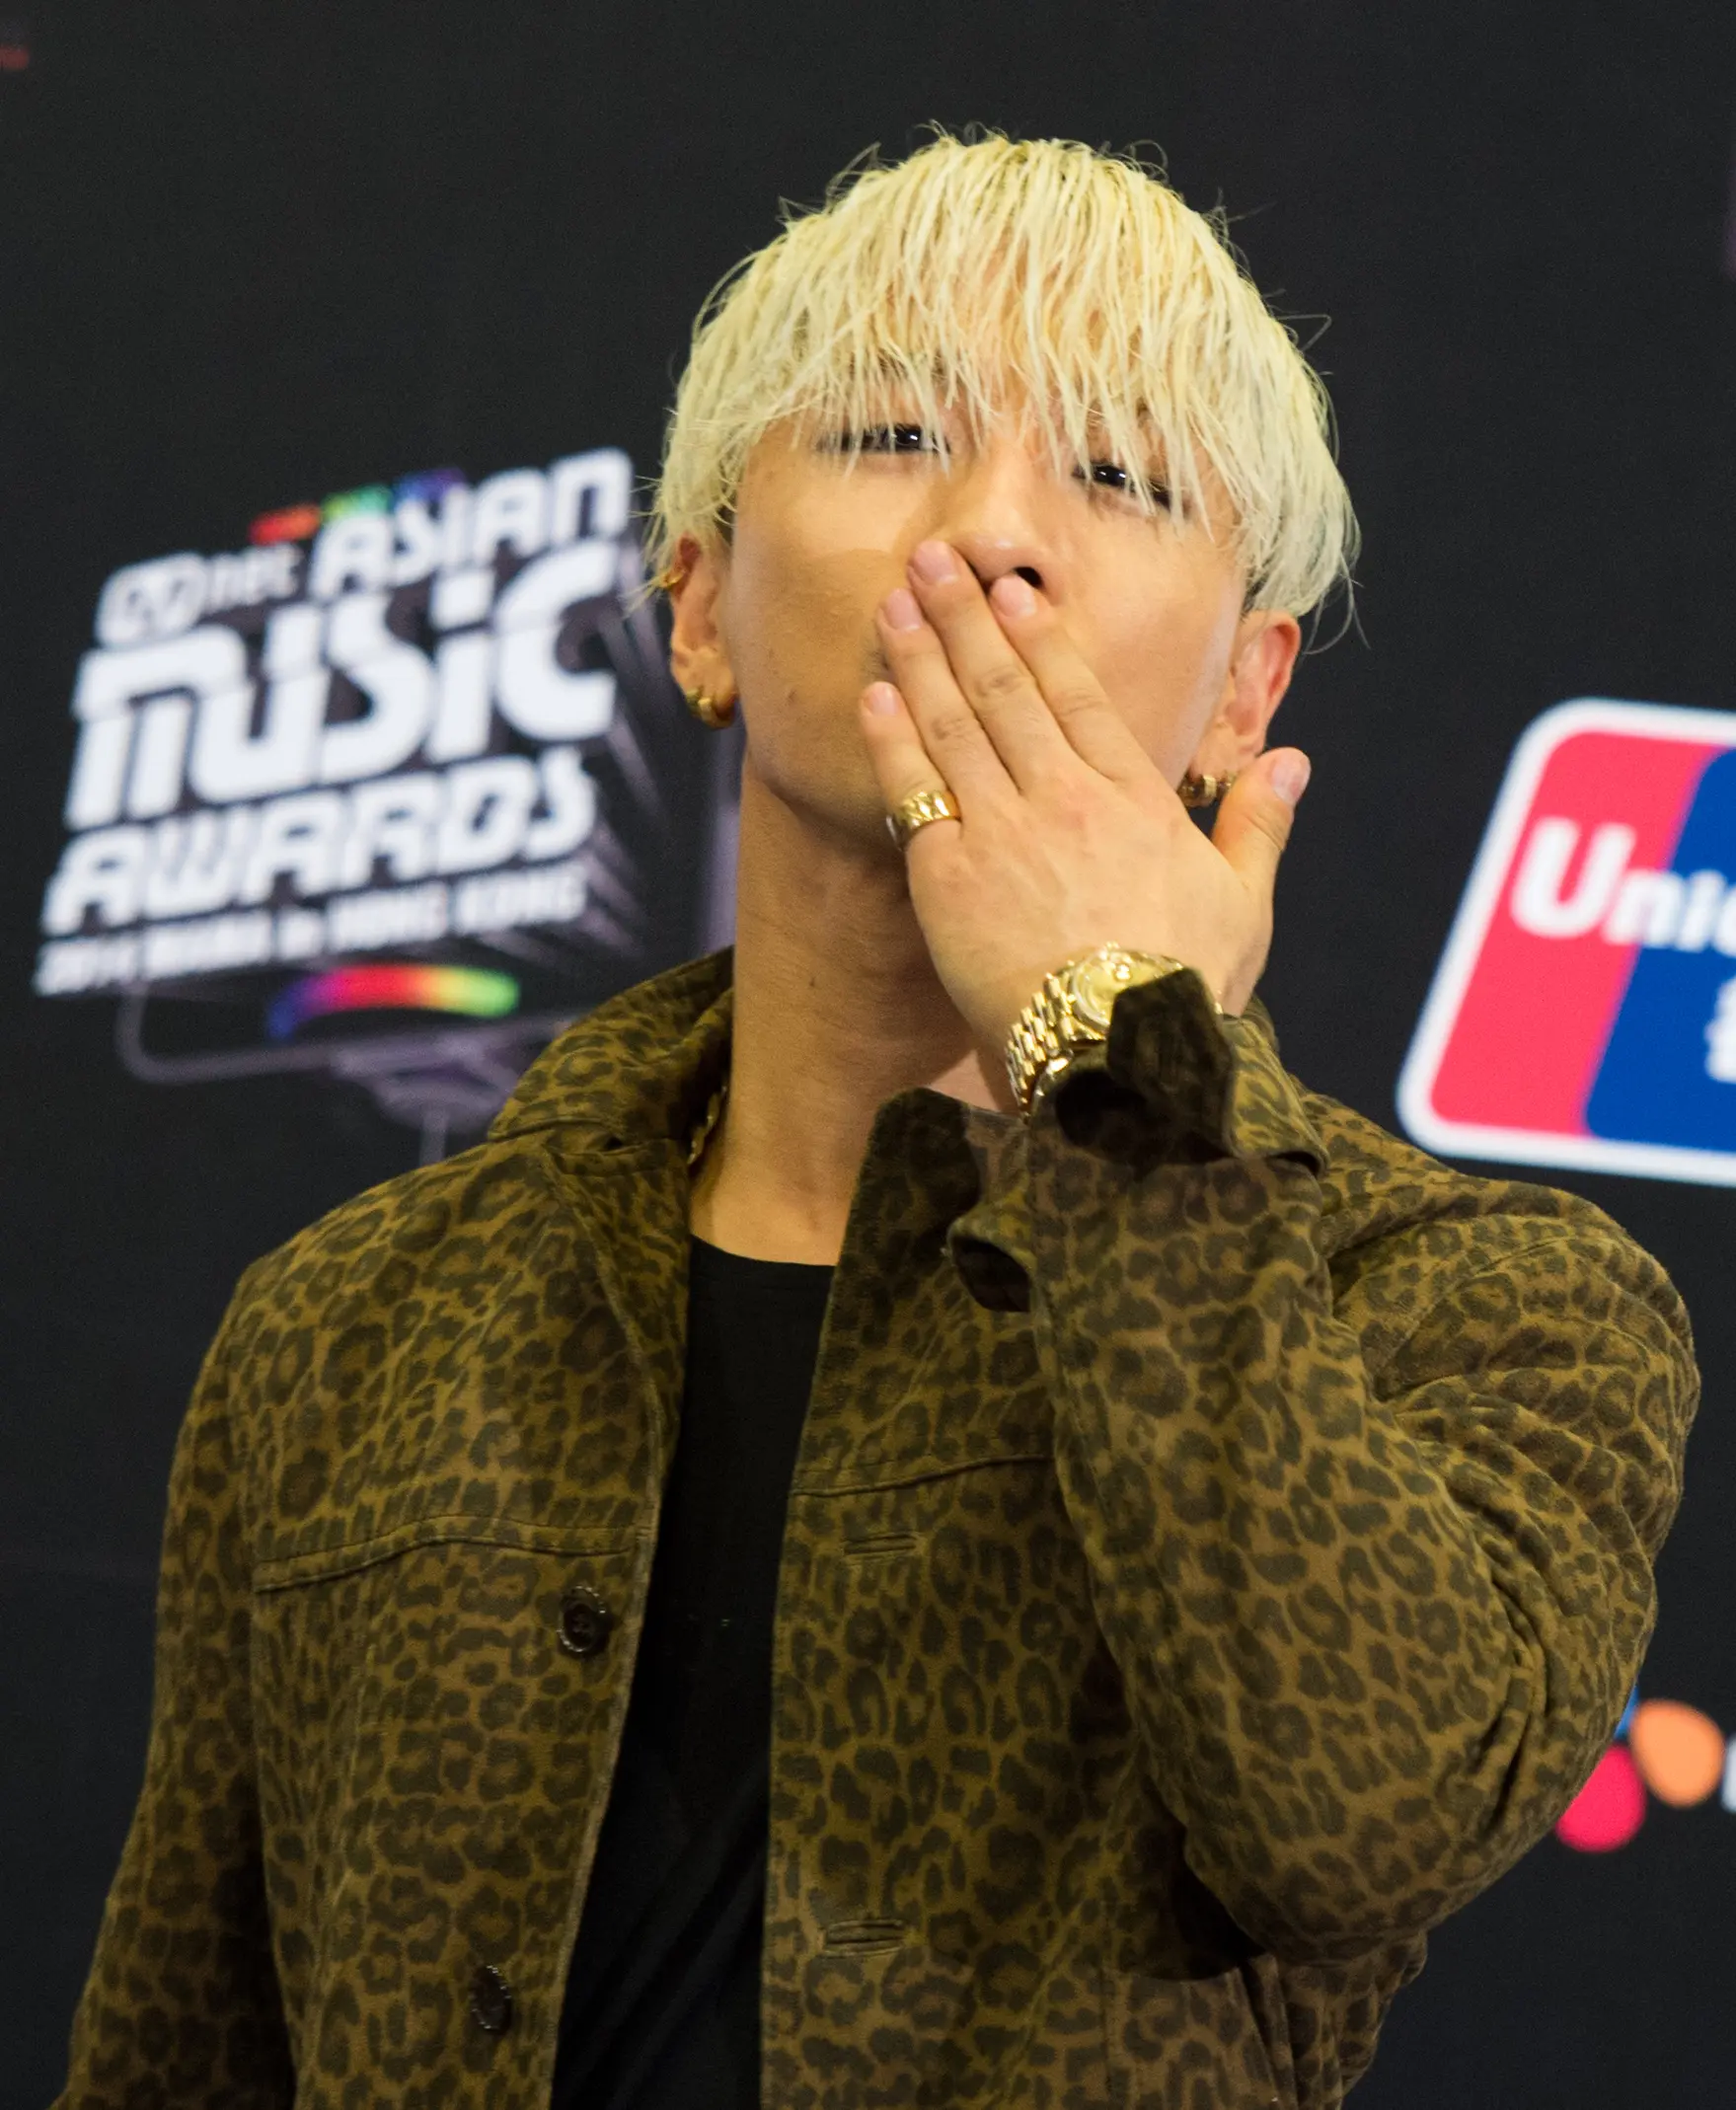 Taeyang BigBang (AFP/Bintang.com)